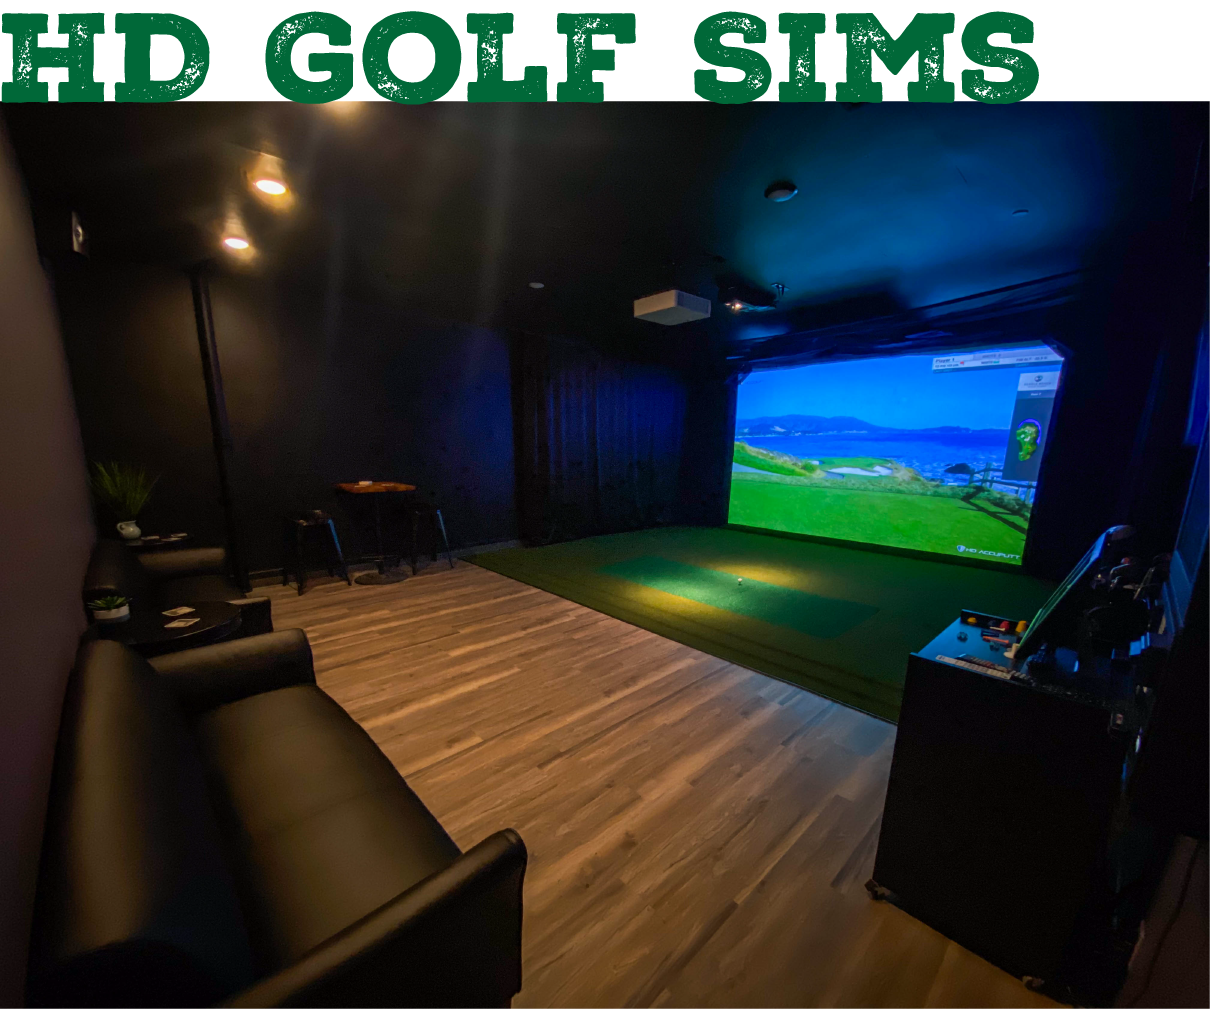 HD Golf sim header